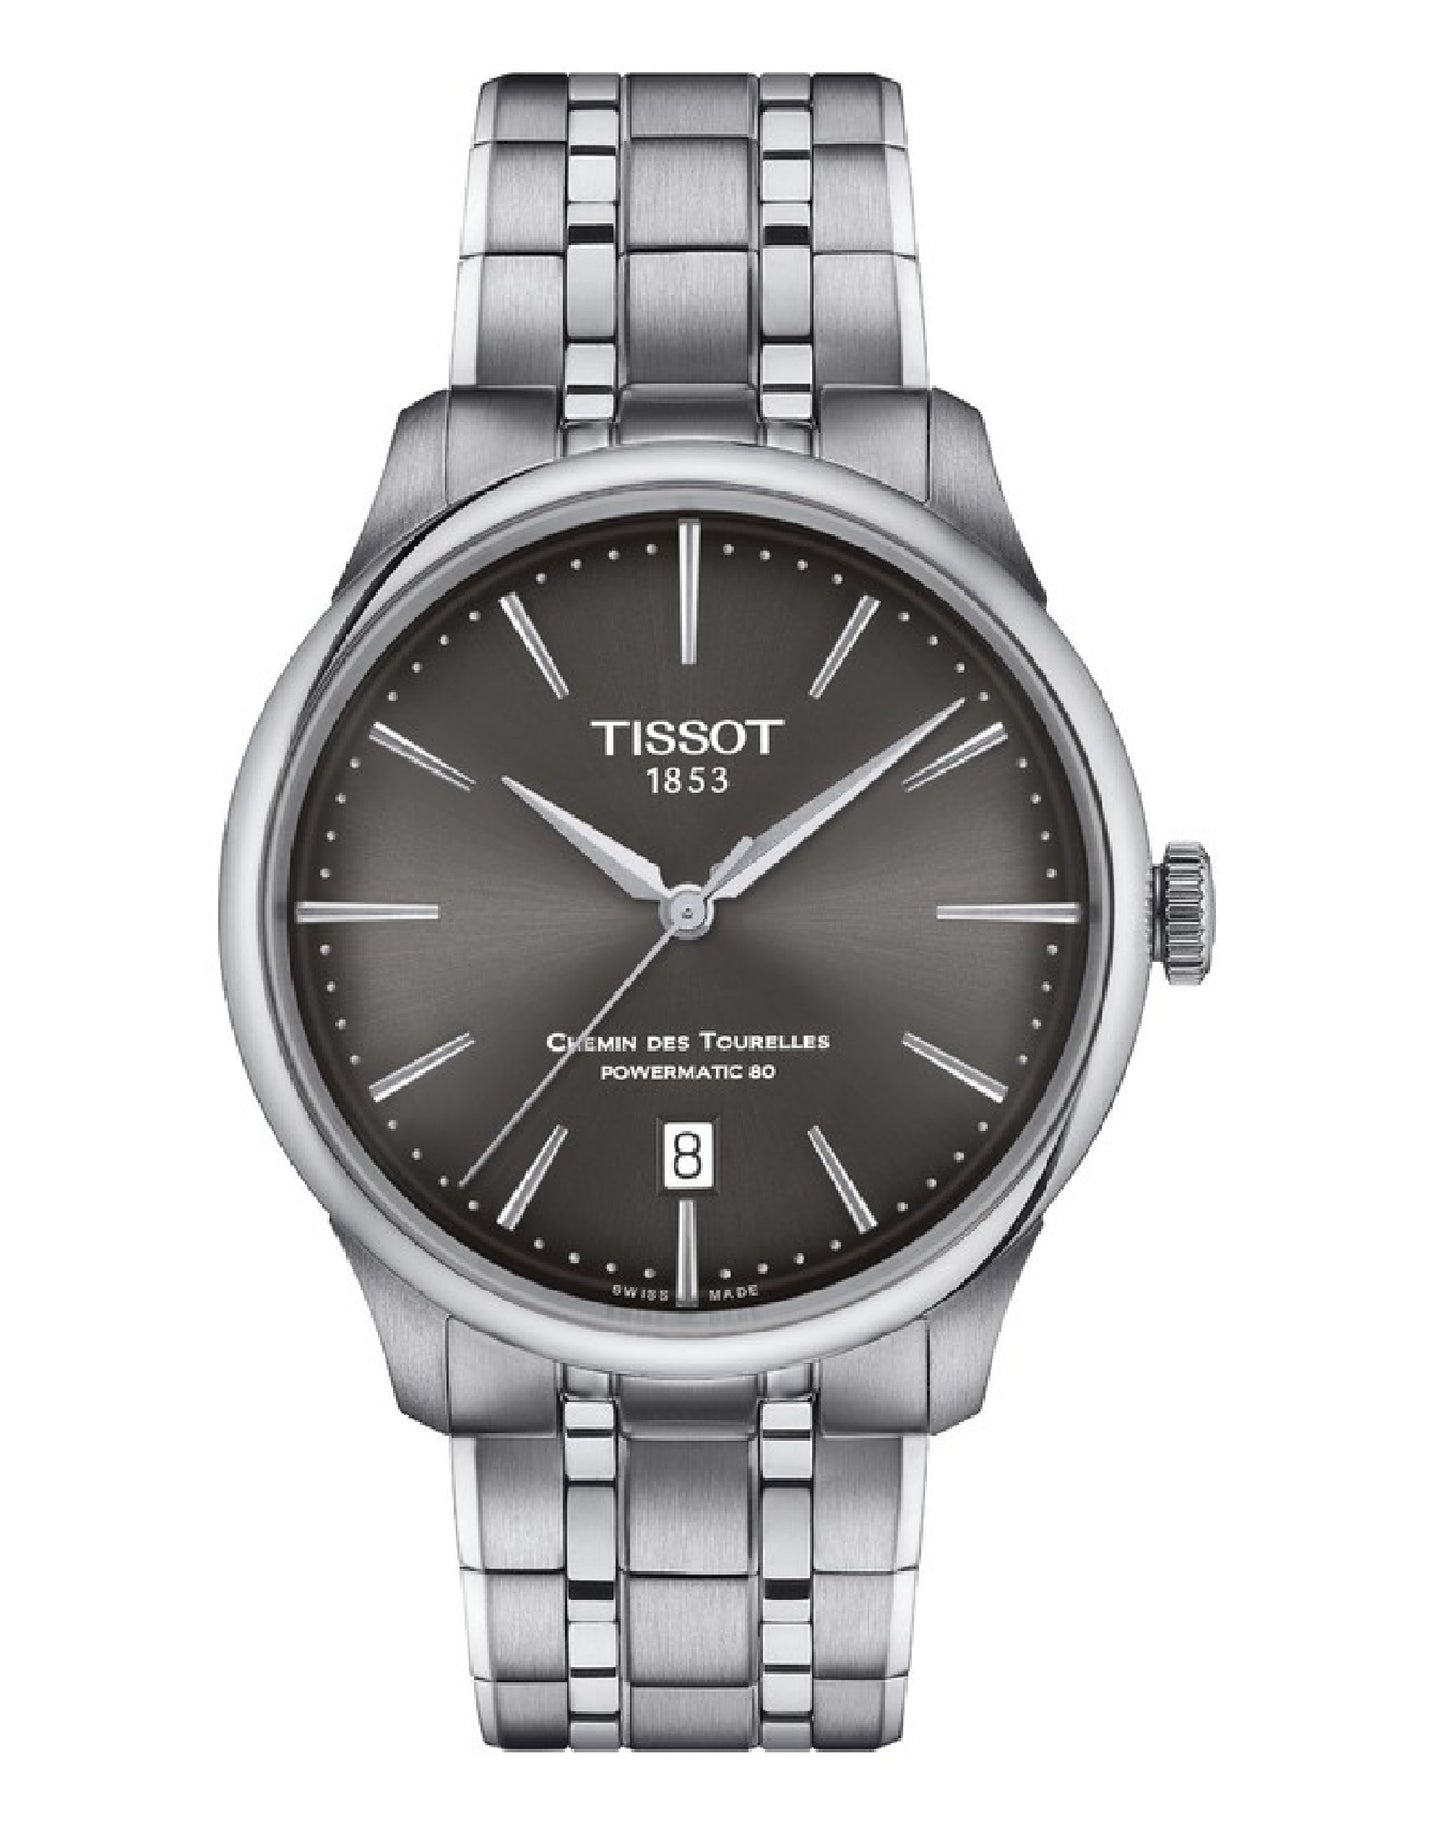 Tissot T139.807.11.061.00 TISSOT Chemin DES Tourelles Powermatic-80 Grey Watch